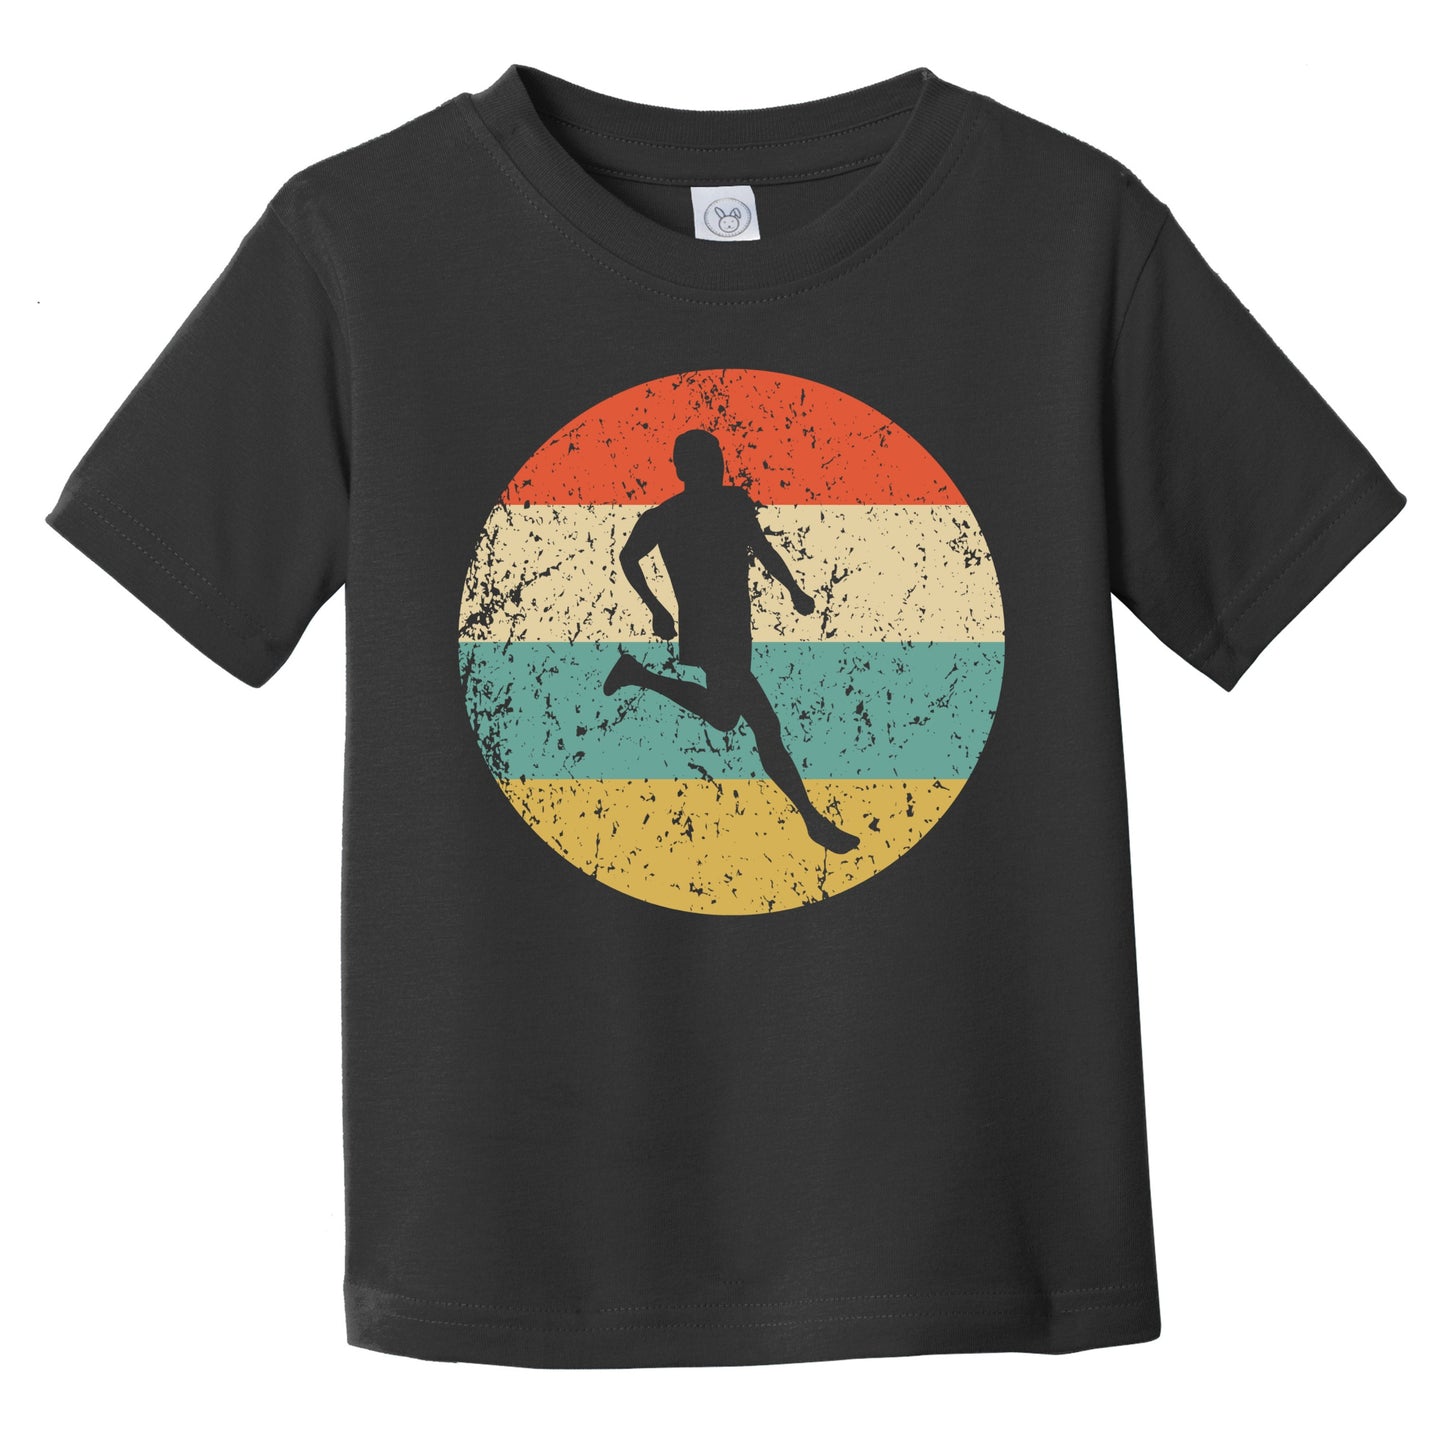 Retro Runner Icon Cross Country Infant Toddler T-Shirt